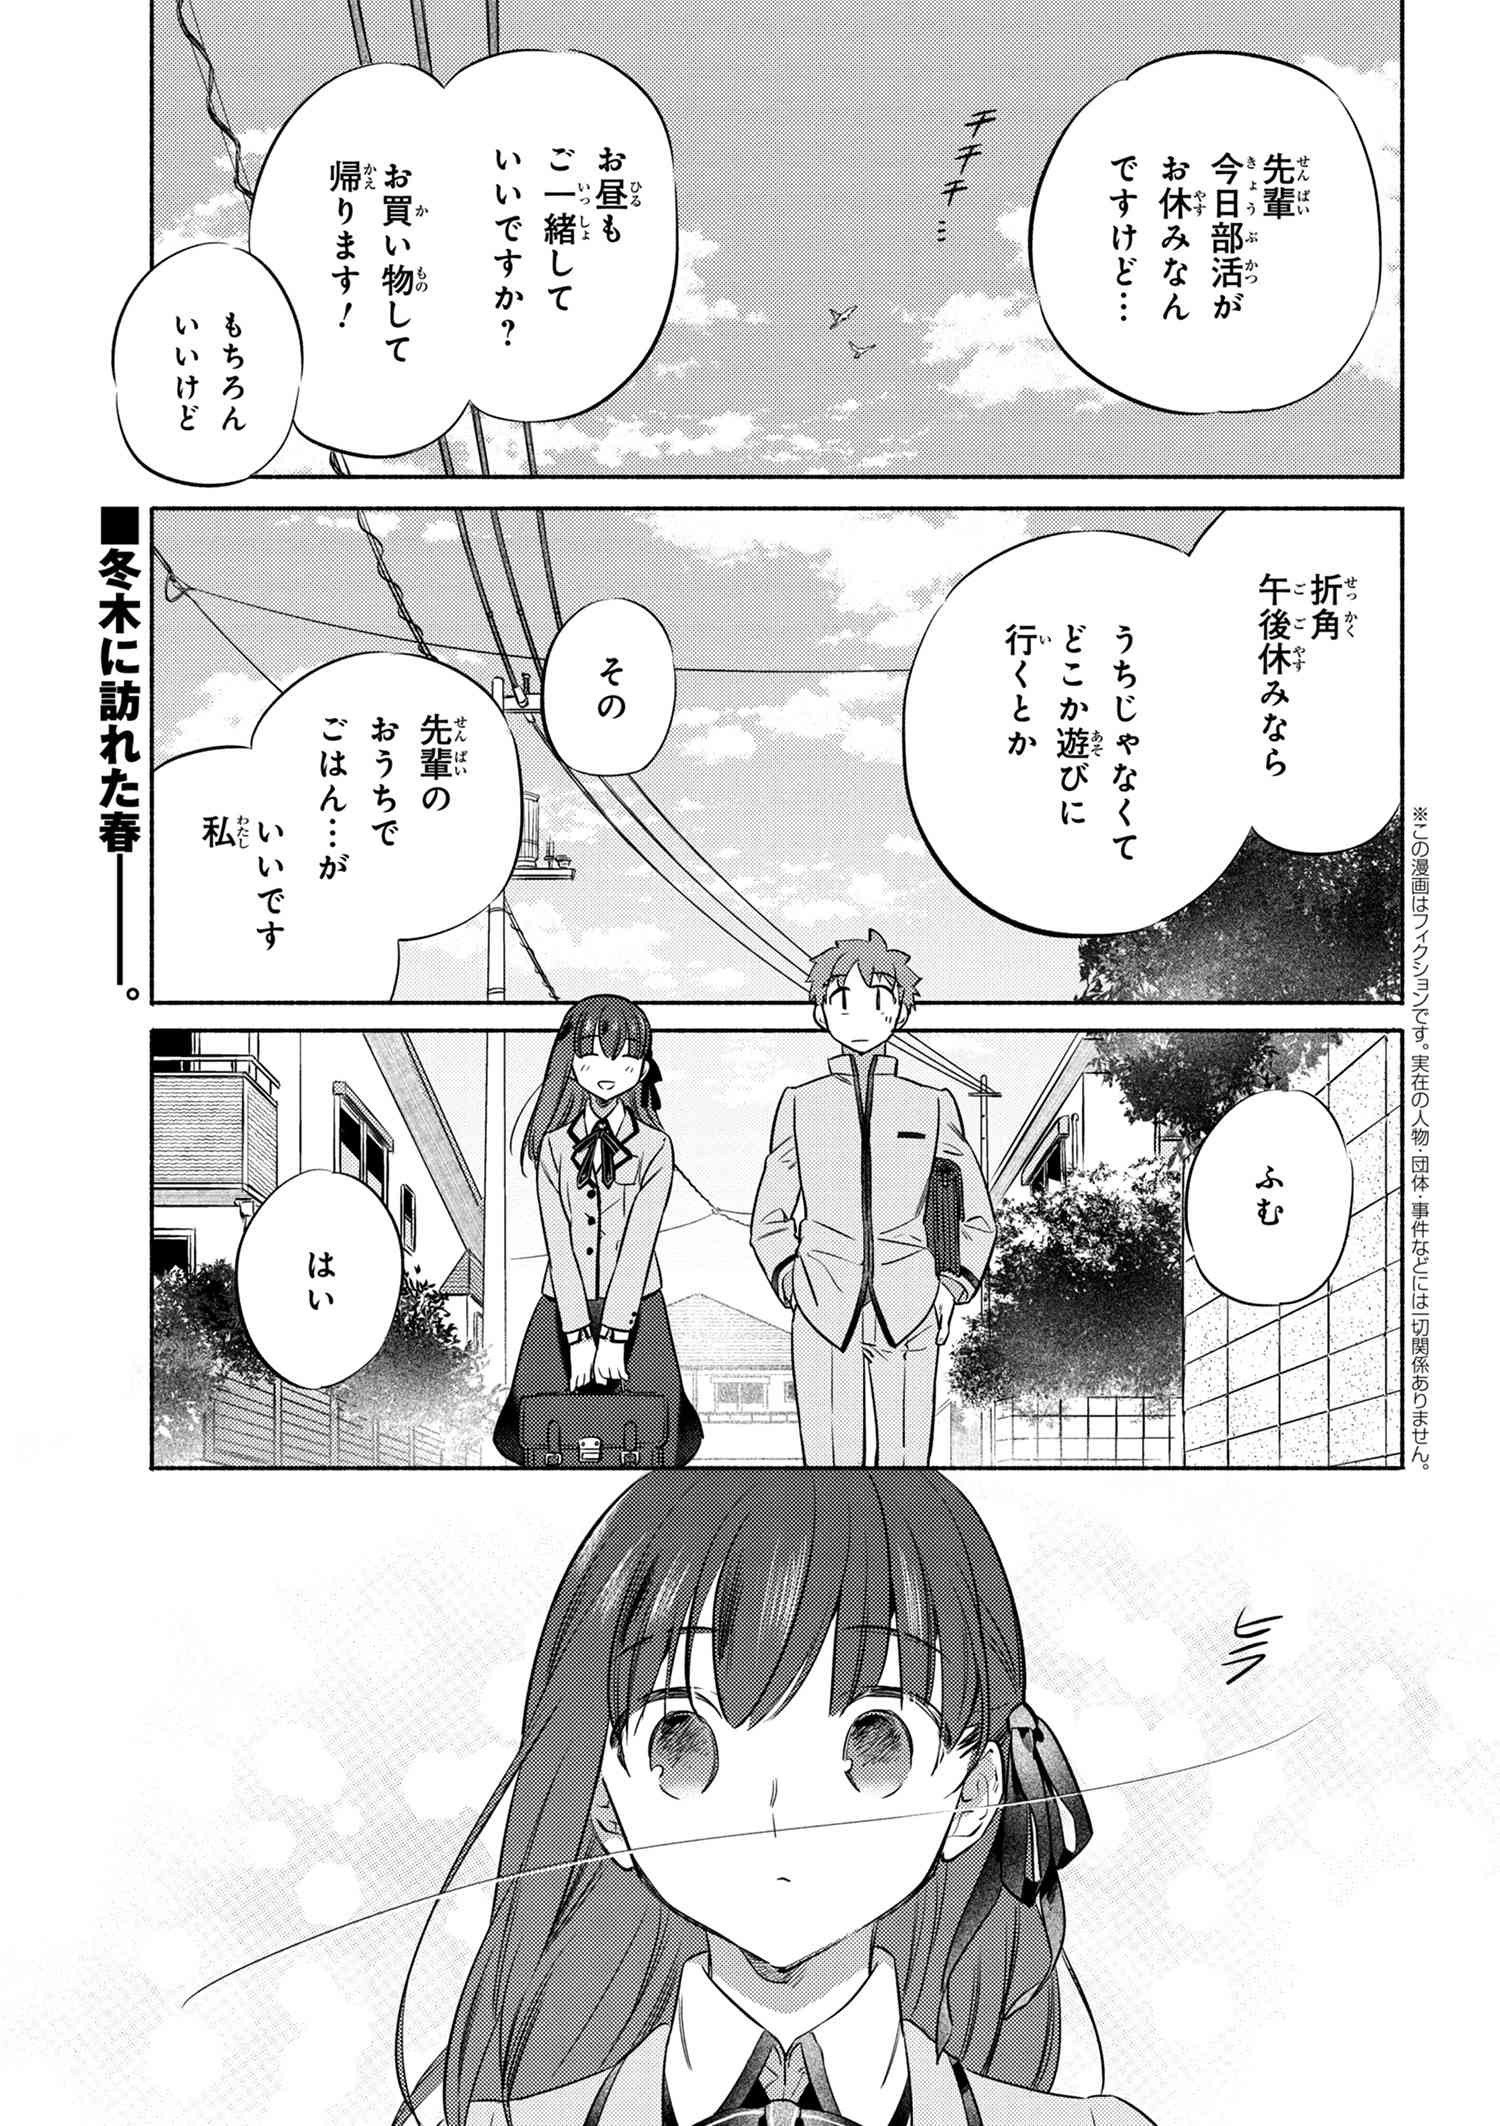 Emiya-san Chi no Kyou no Gohan - Chapter 39 - Page 1